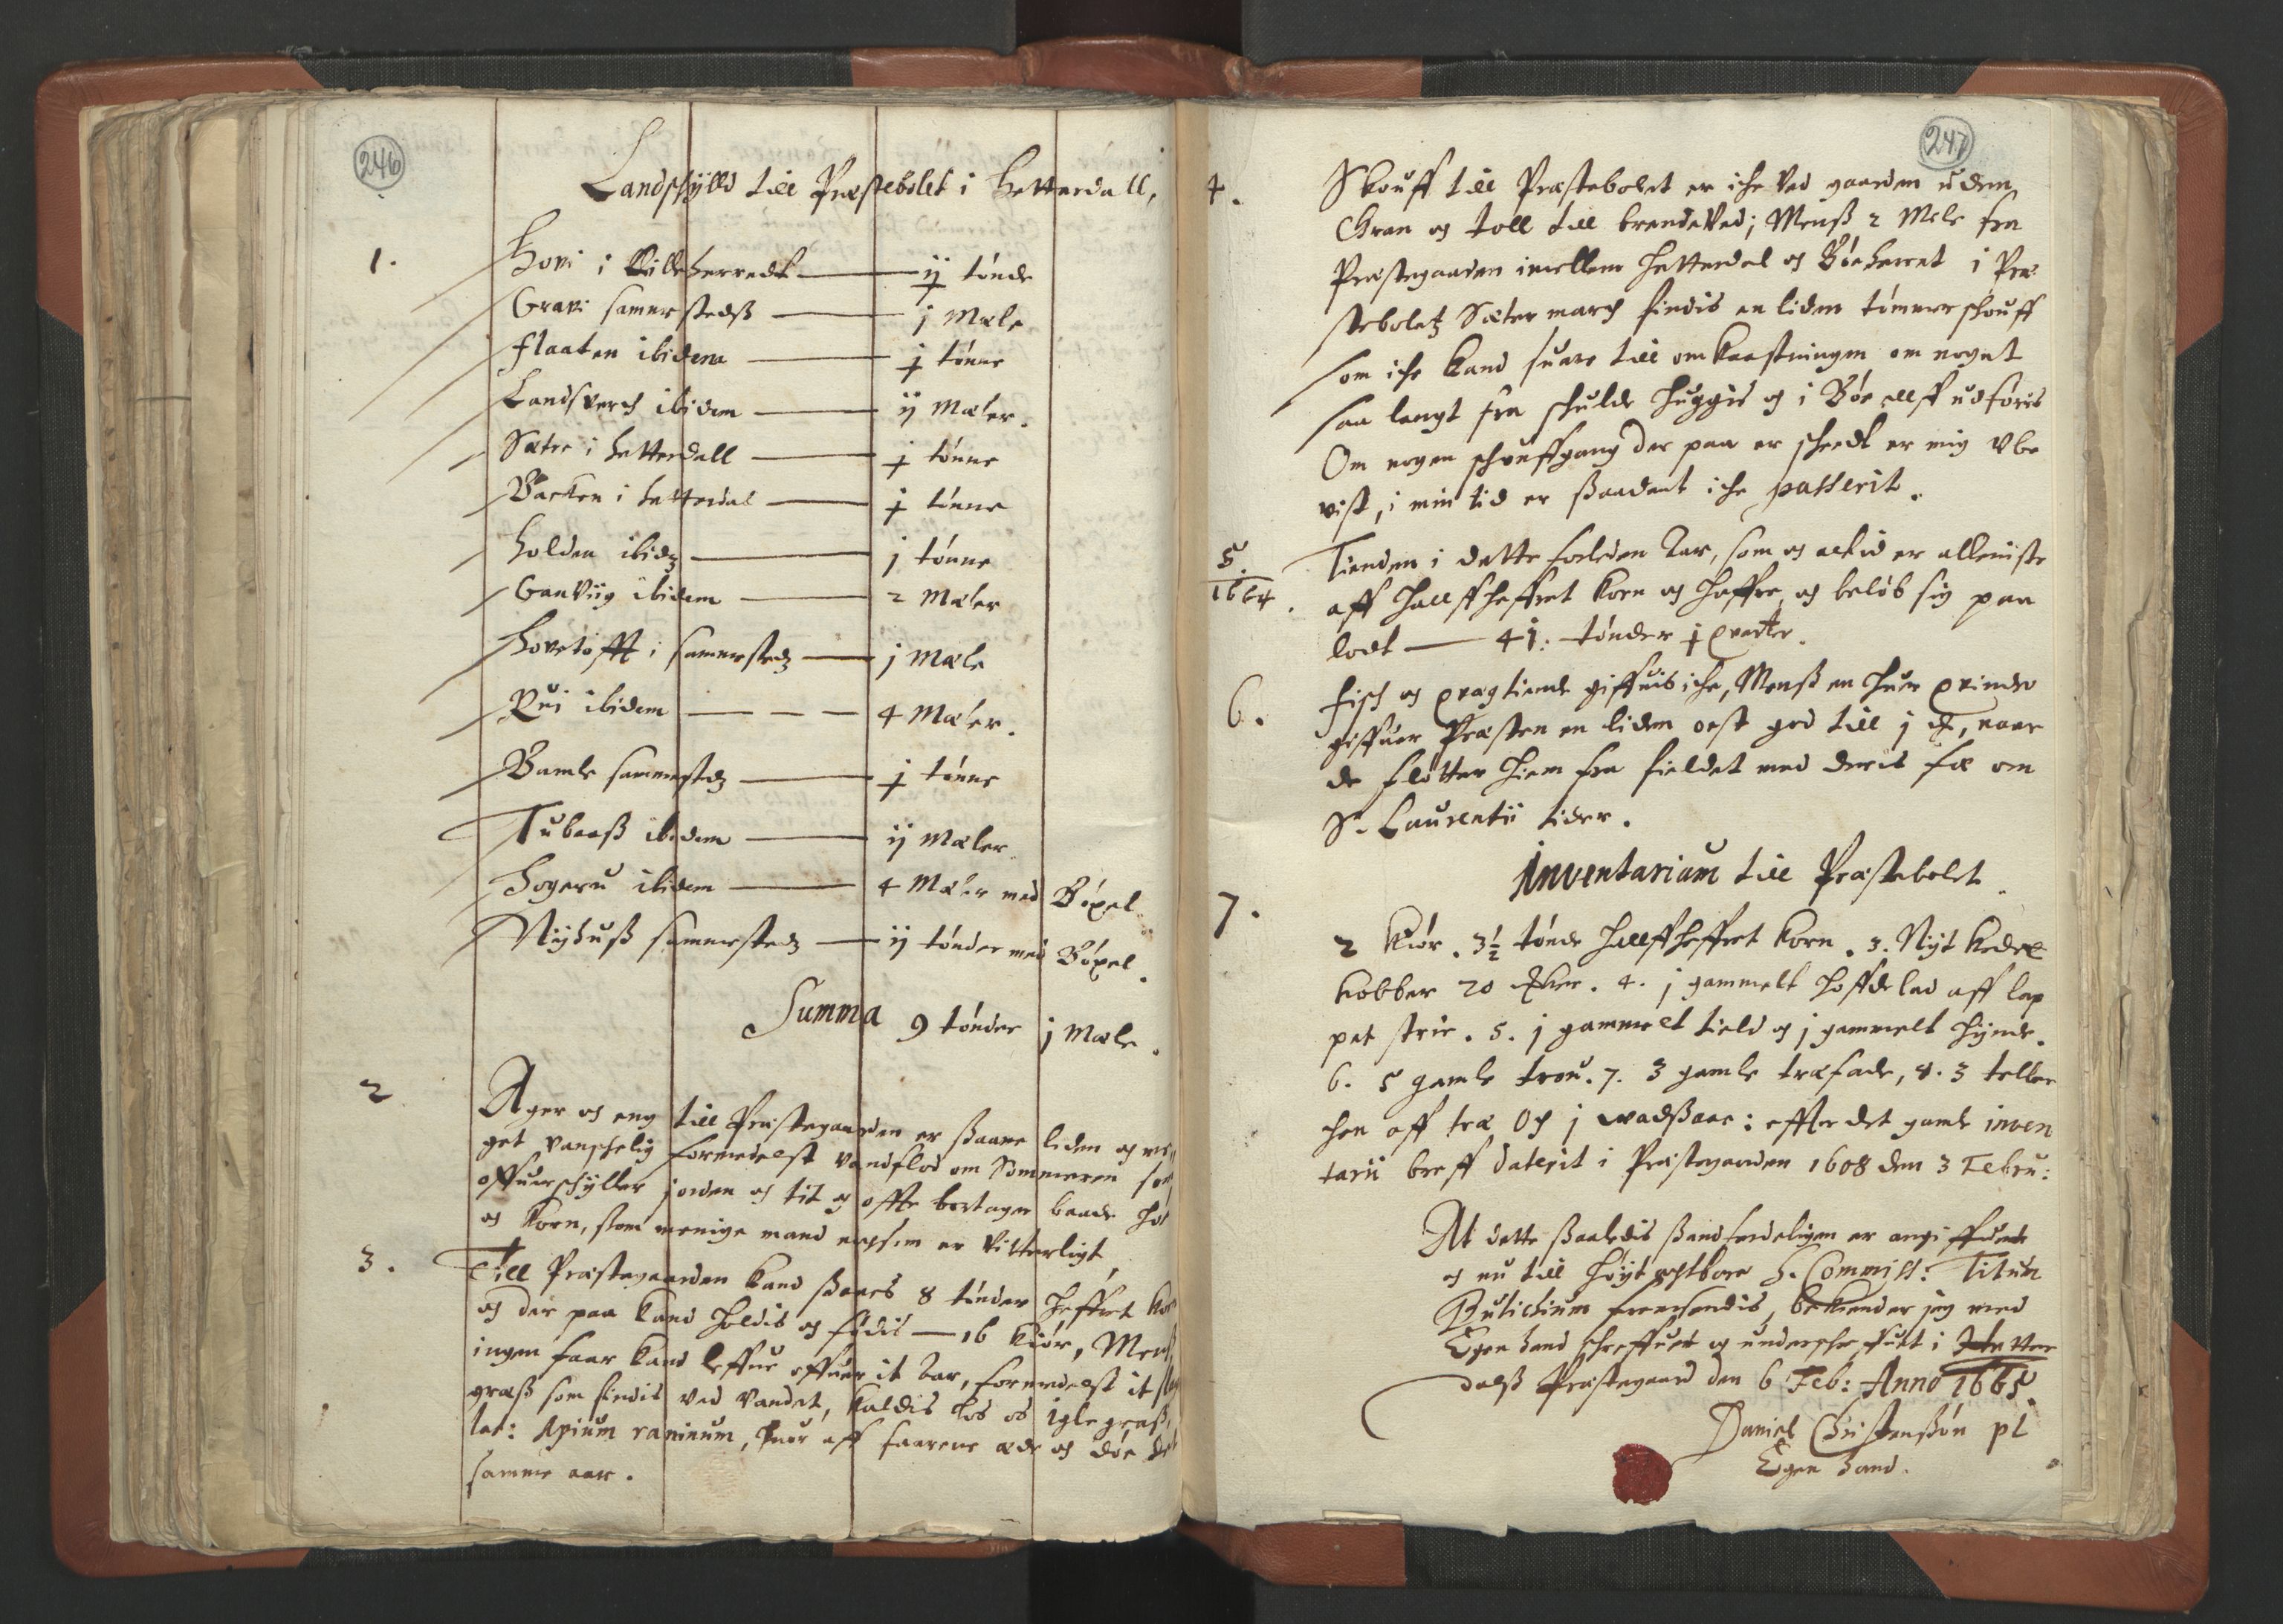 RA, Vicar's Census 1664-1666, no. 12: Øvre Telemark deanery, Nedre Telemark deanery and Bamble deanery, 1664-1666, p. 246-247